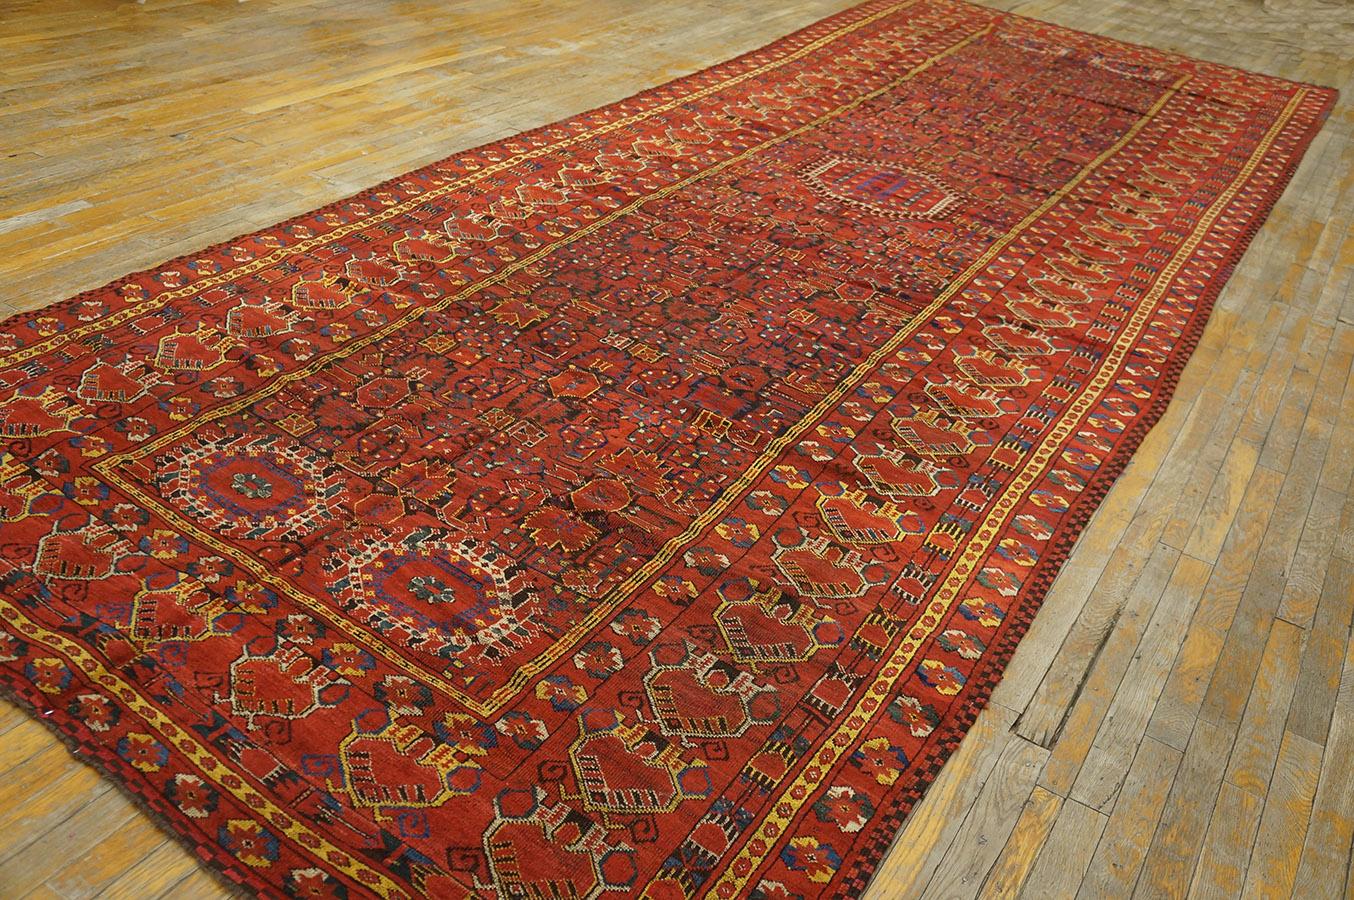 Wool 19th Century Central Asian Ersari-Beshir Gallery Carpet (6'6